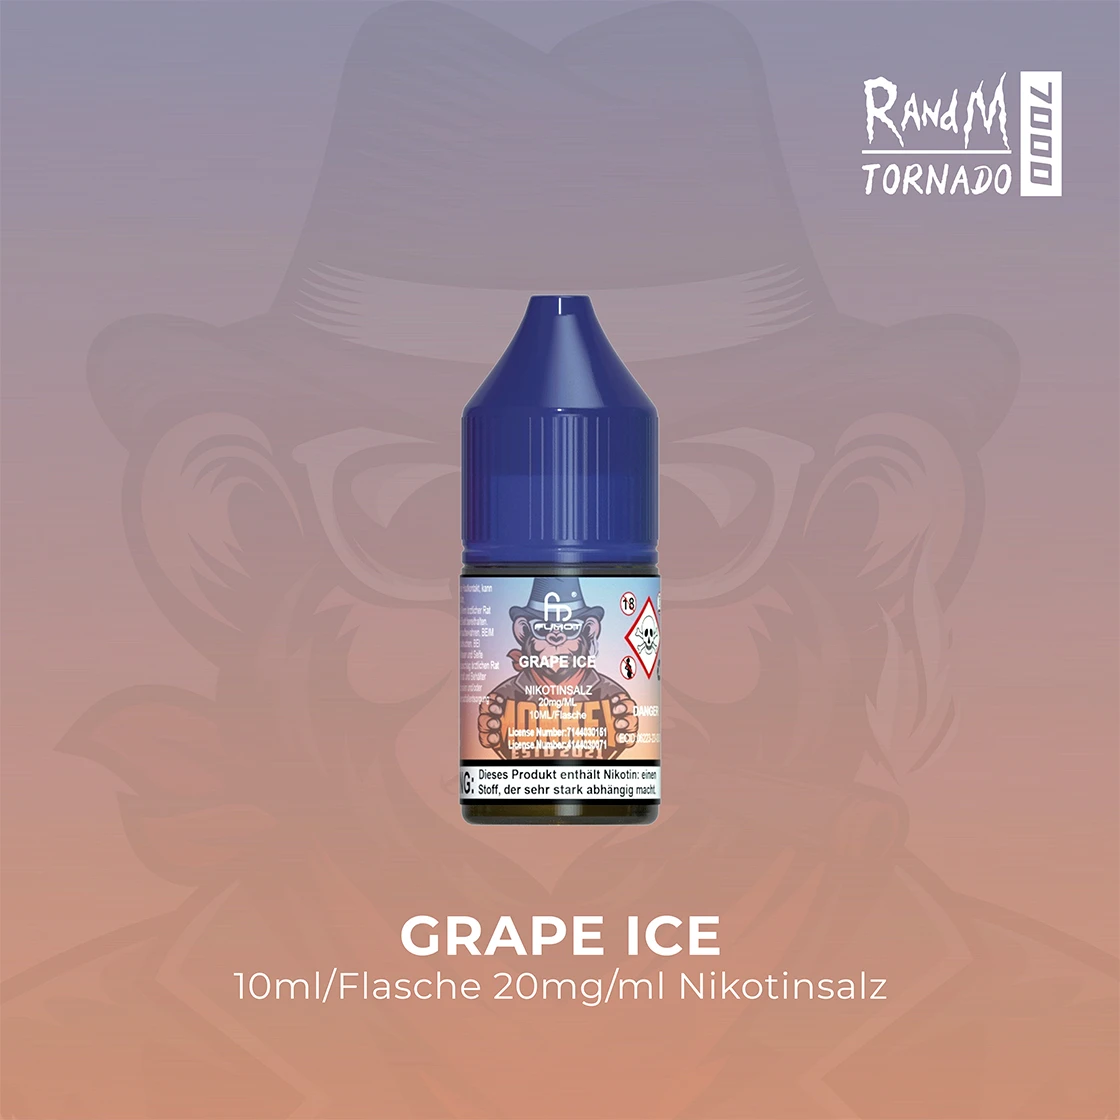 RandM Tornado 7000 Grape Ice E-Liquid Nikotinsalz 20 mg | Vape Liquids 1